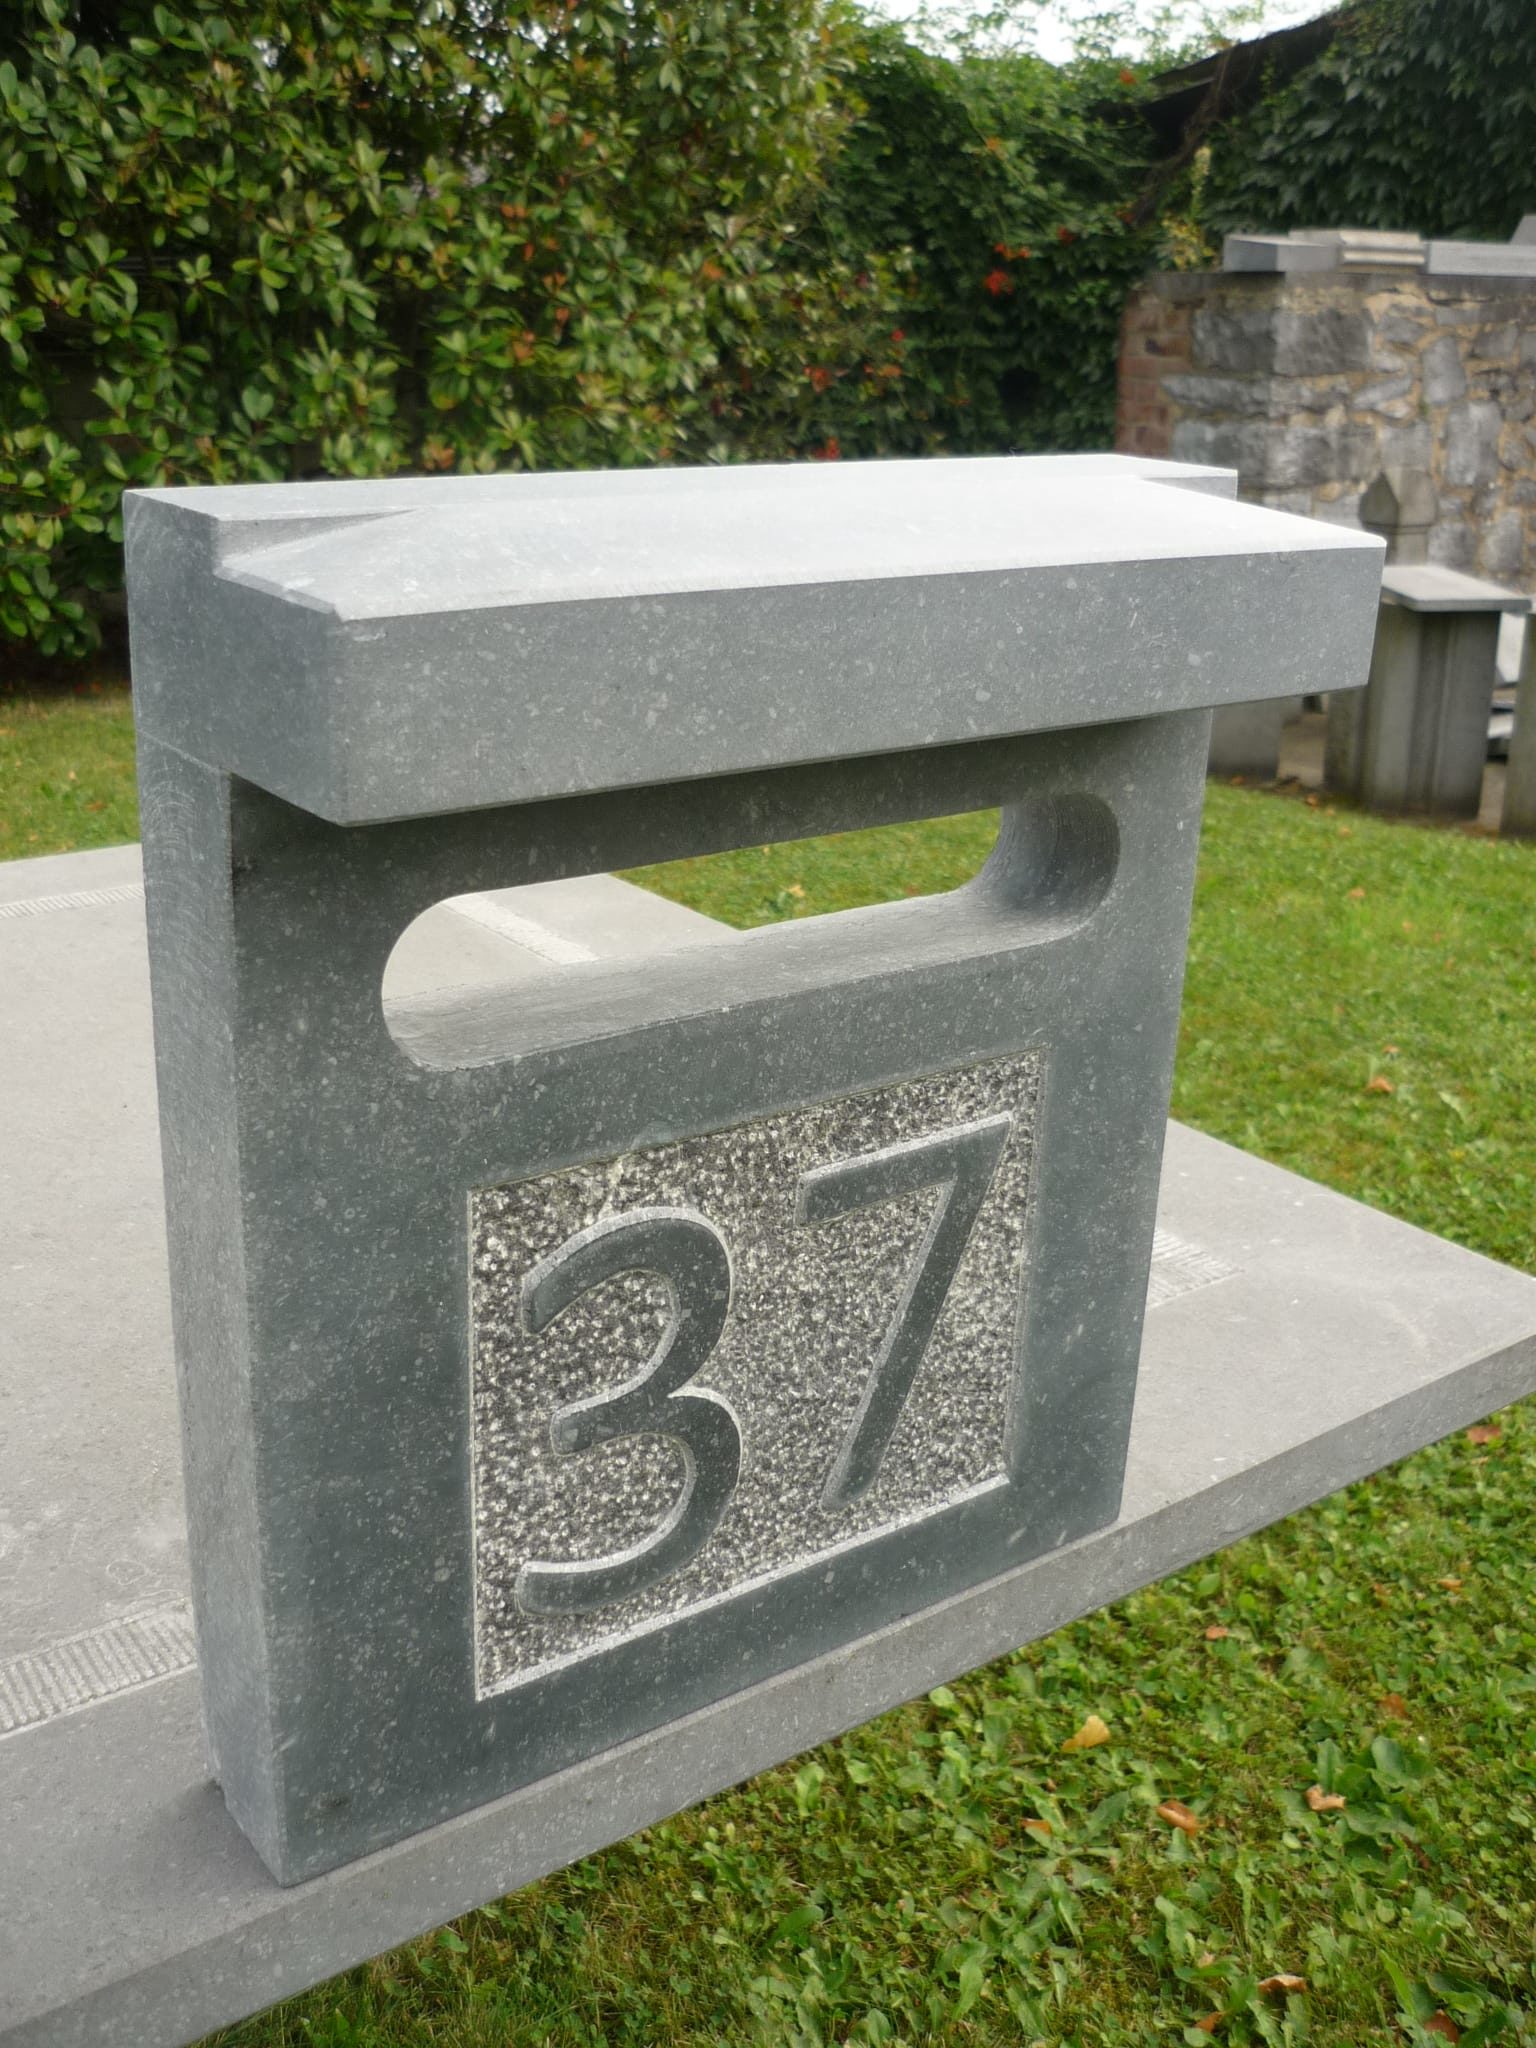 Built-in letterbox in Belgian blue stone